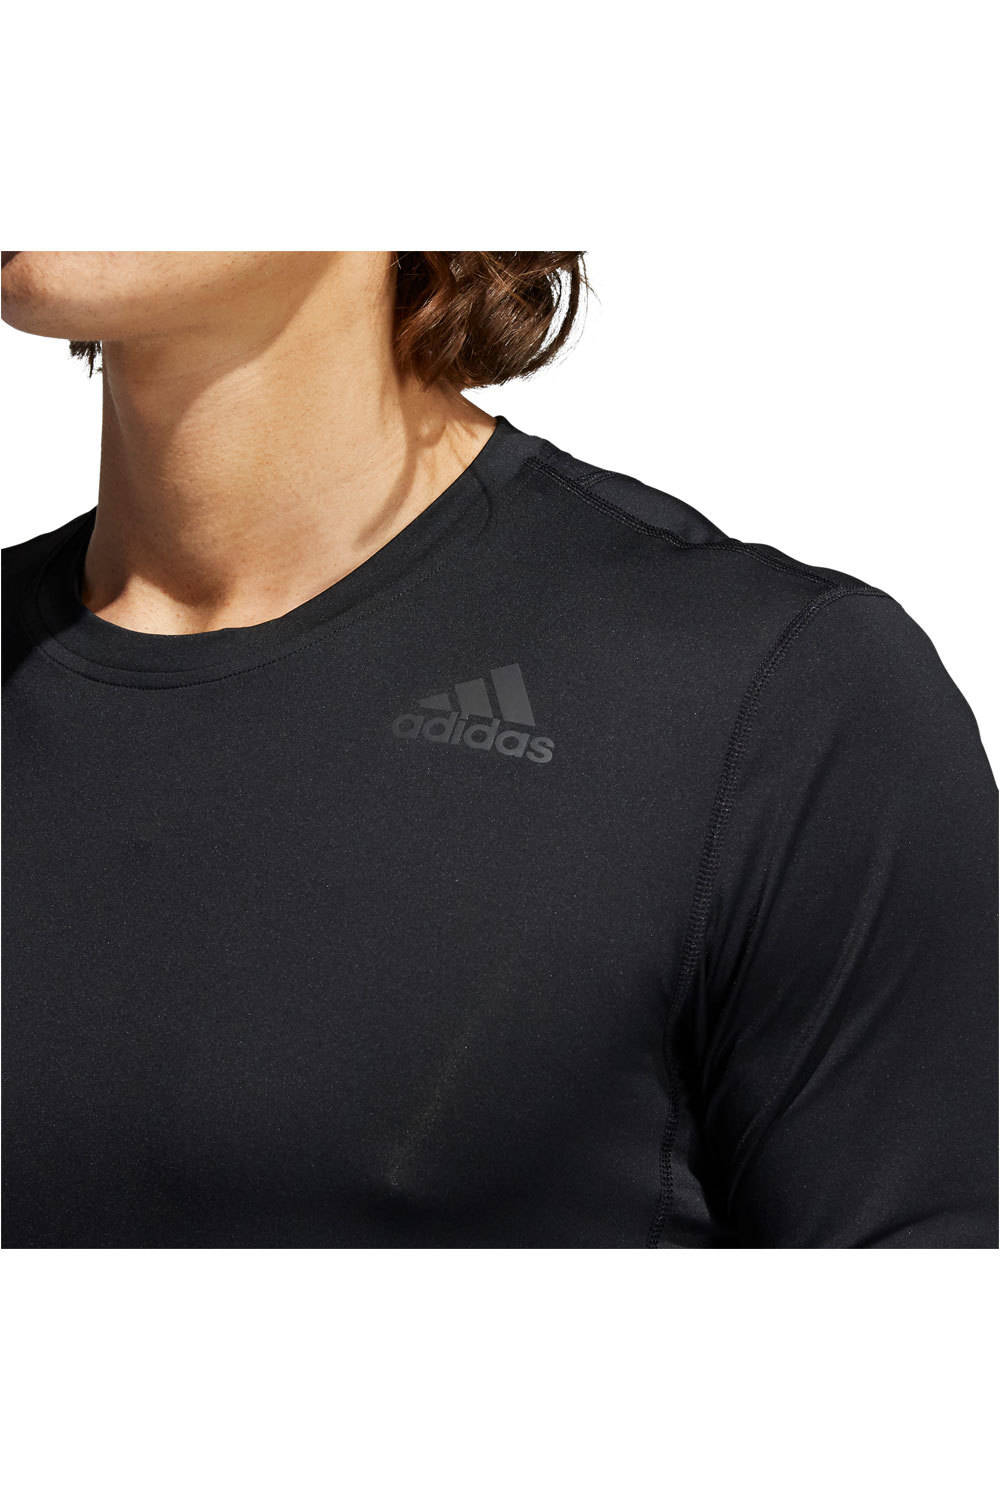 adidas camiseta fitness hombre TF LS FT 3S vista detalle